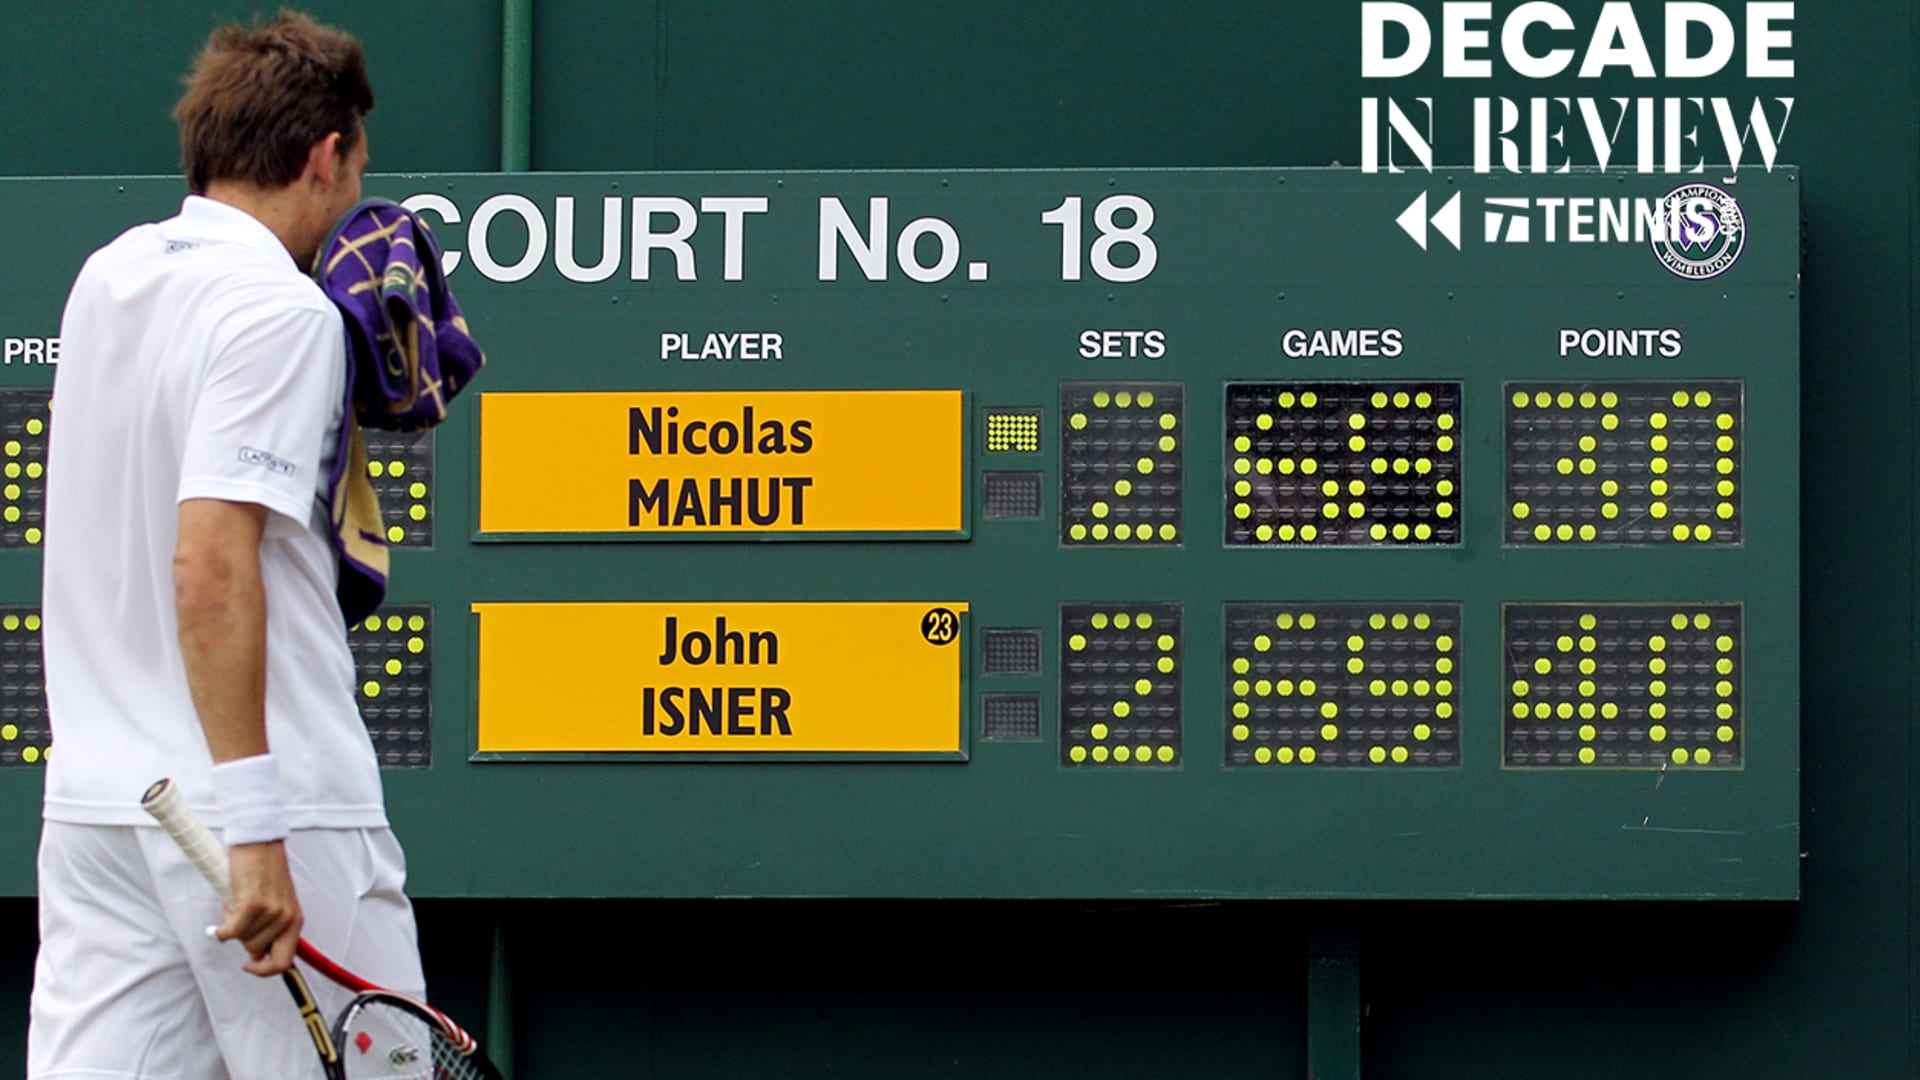 Men's Match of the Decade No. 6: Isner d. Mahut, 2010 Wimbledon